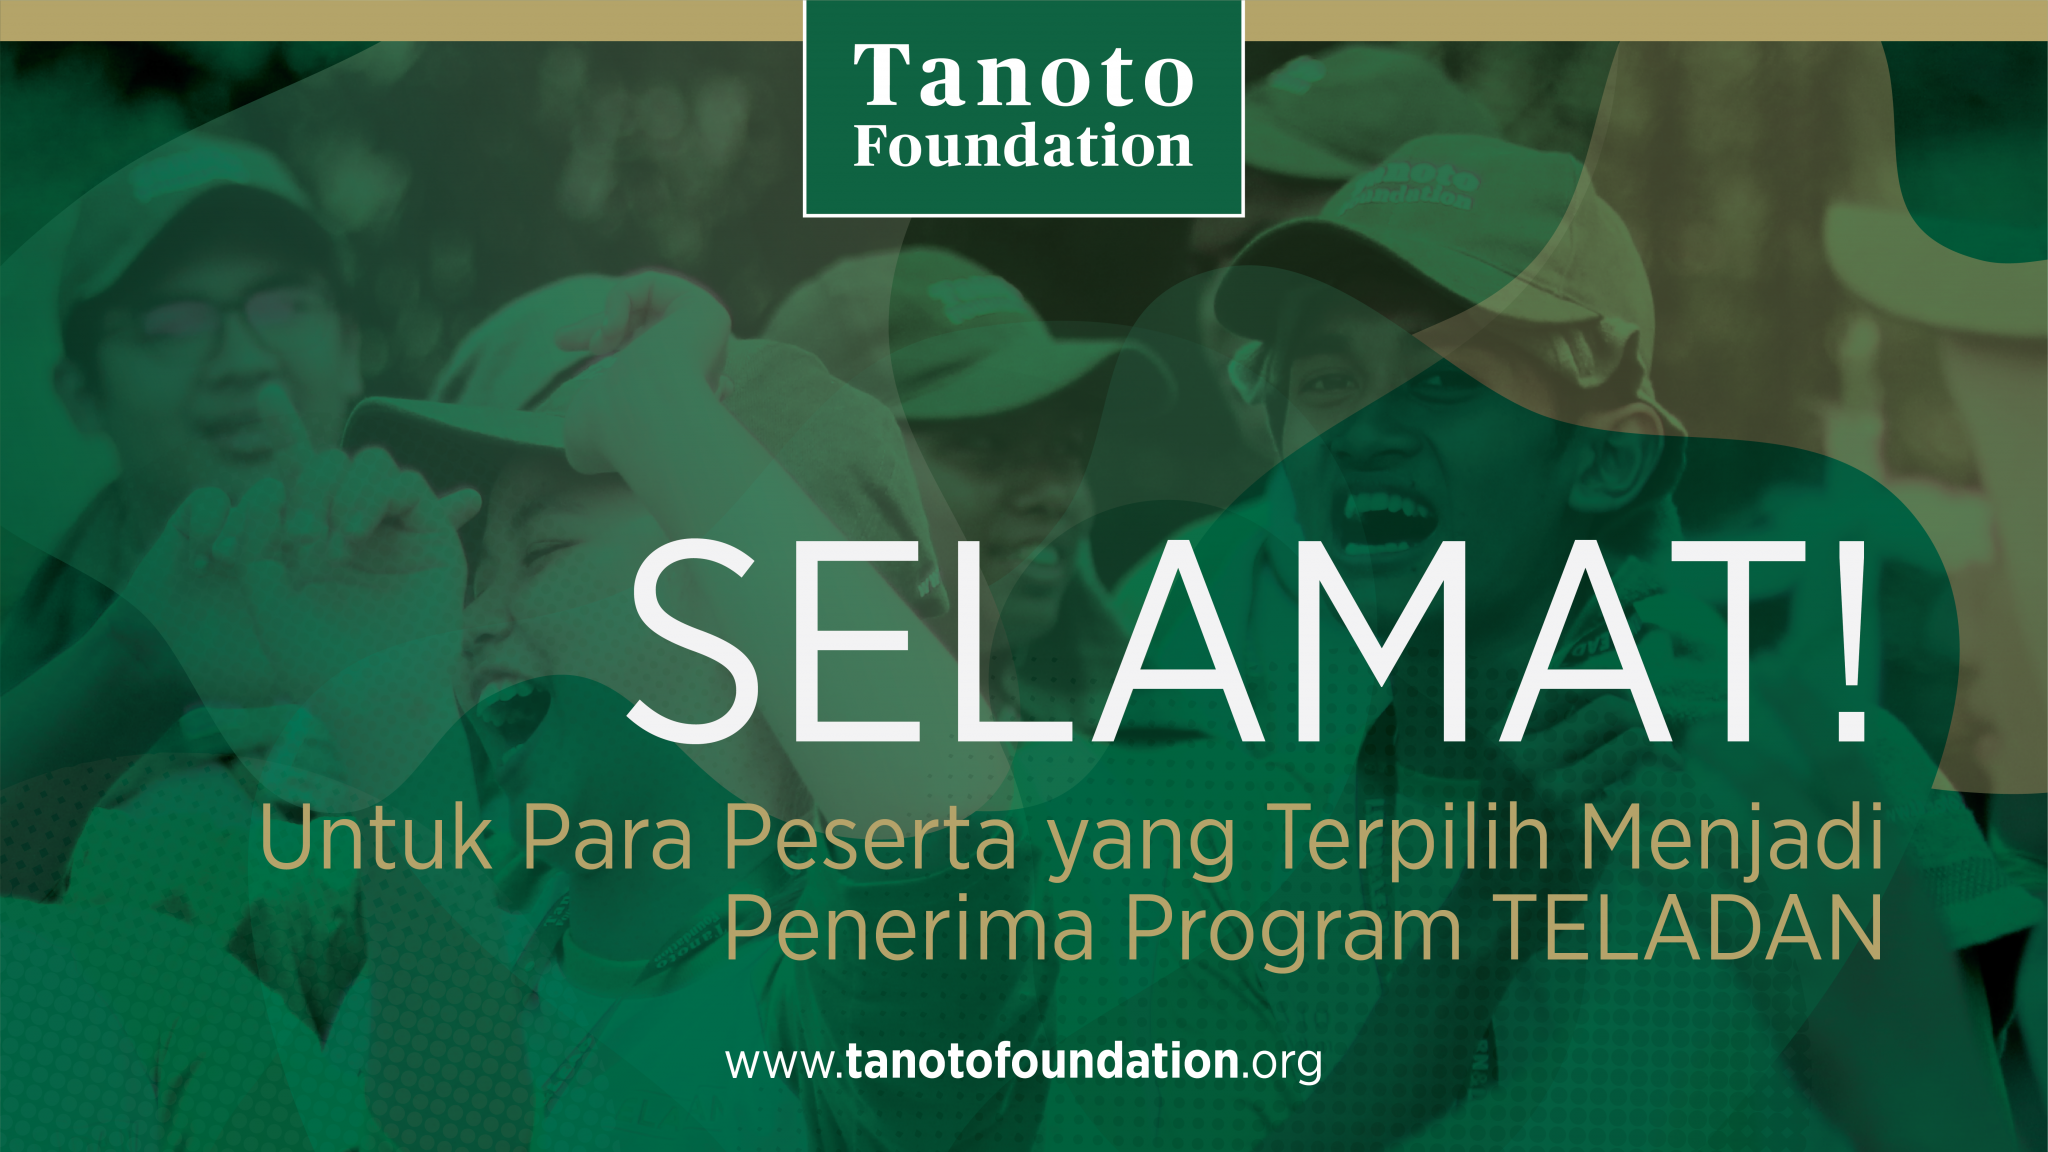 Pengumuman Penerima Program Teladan 2020 Tanoto Foundation